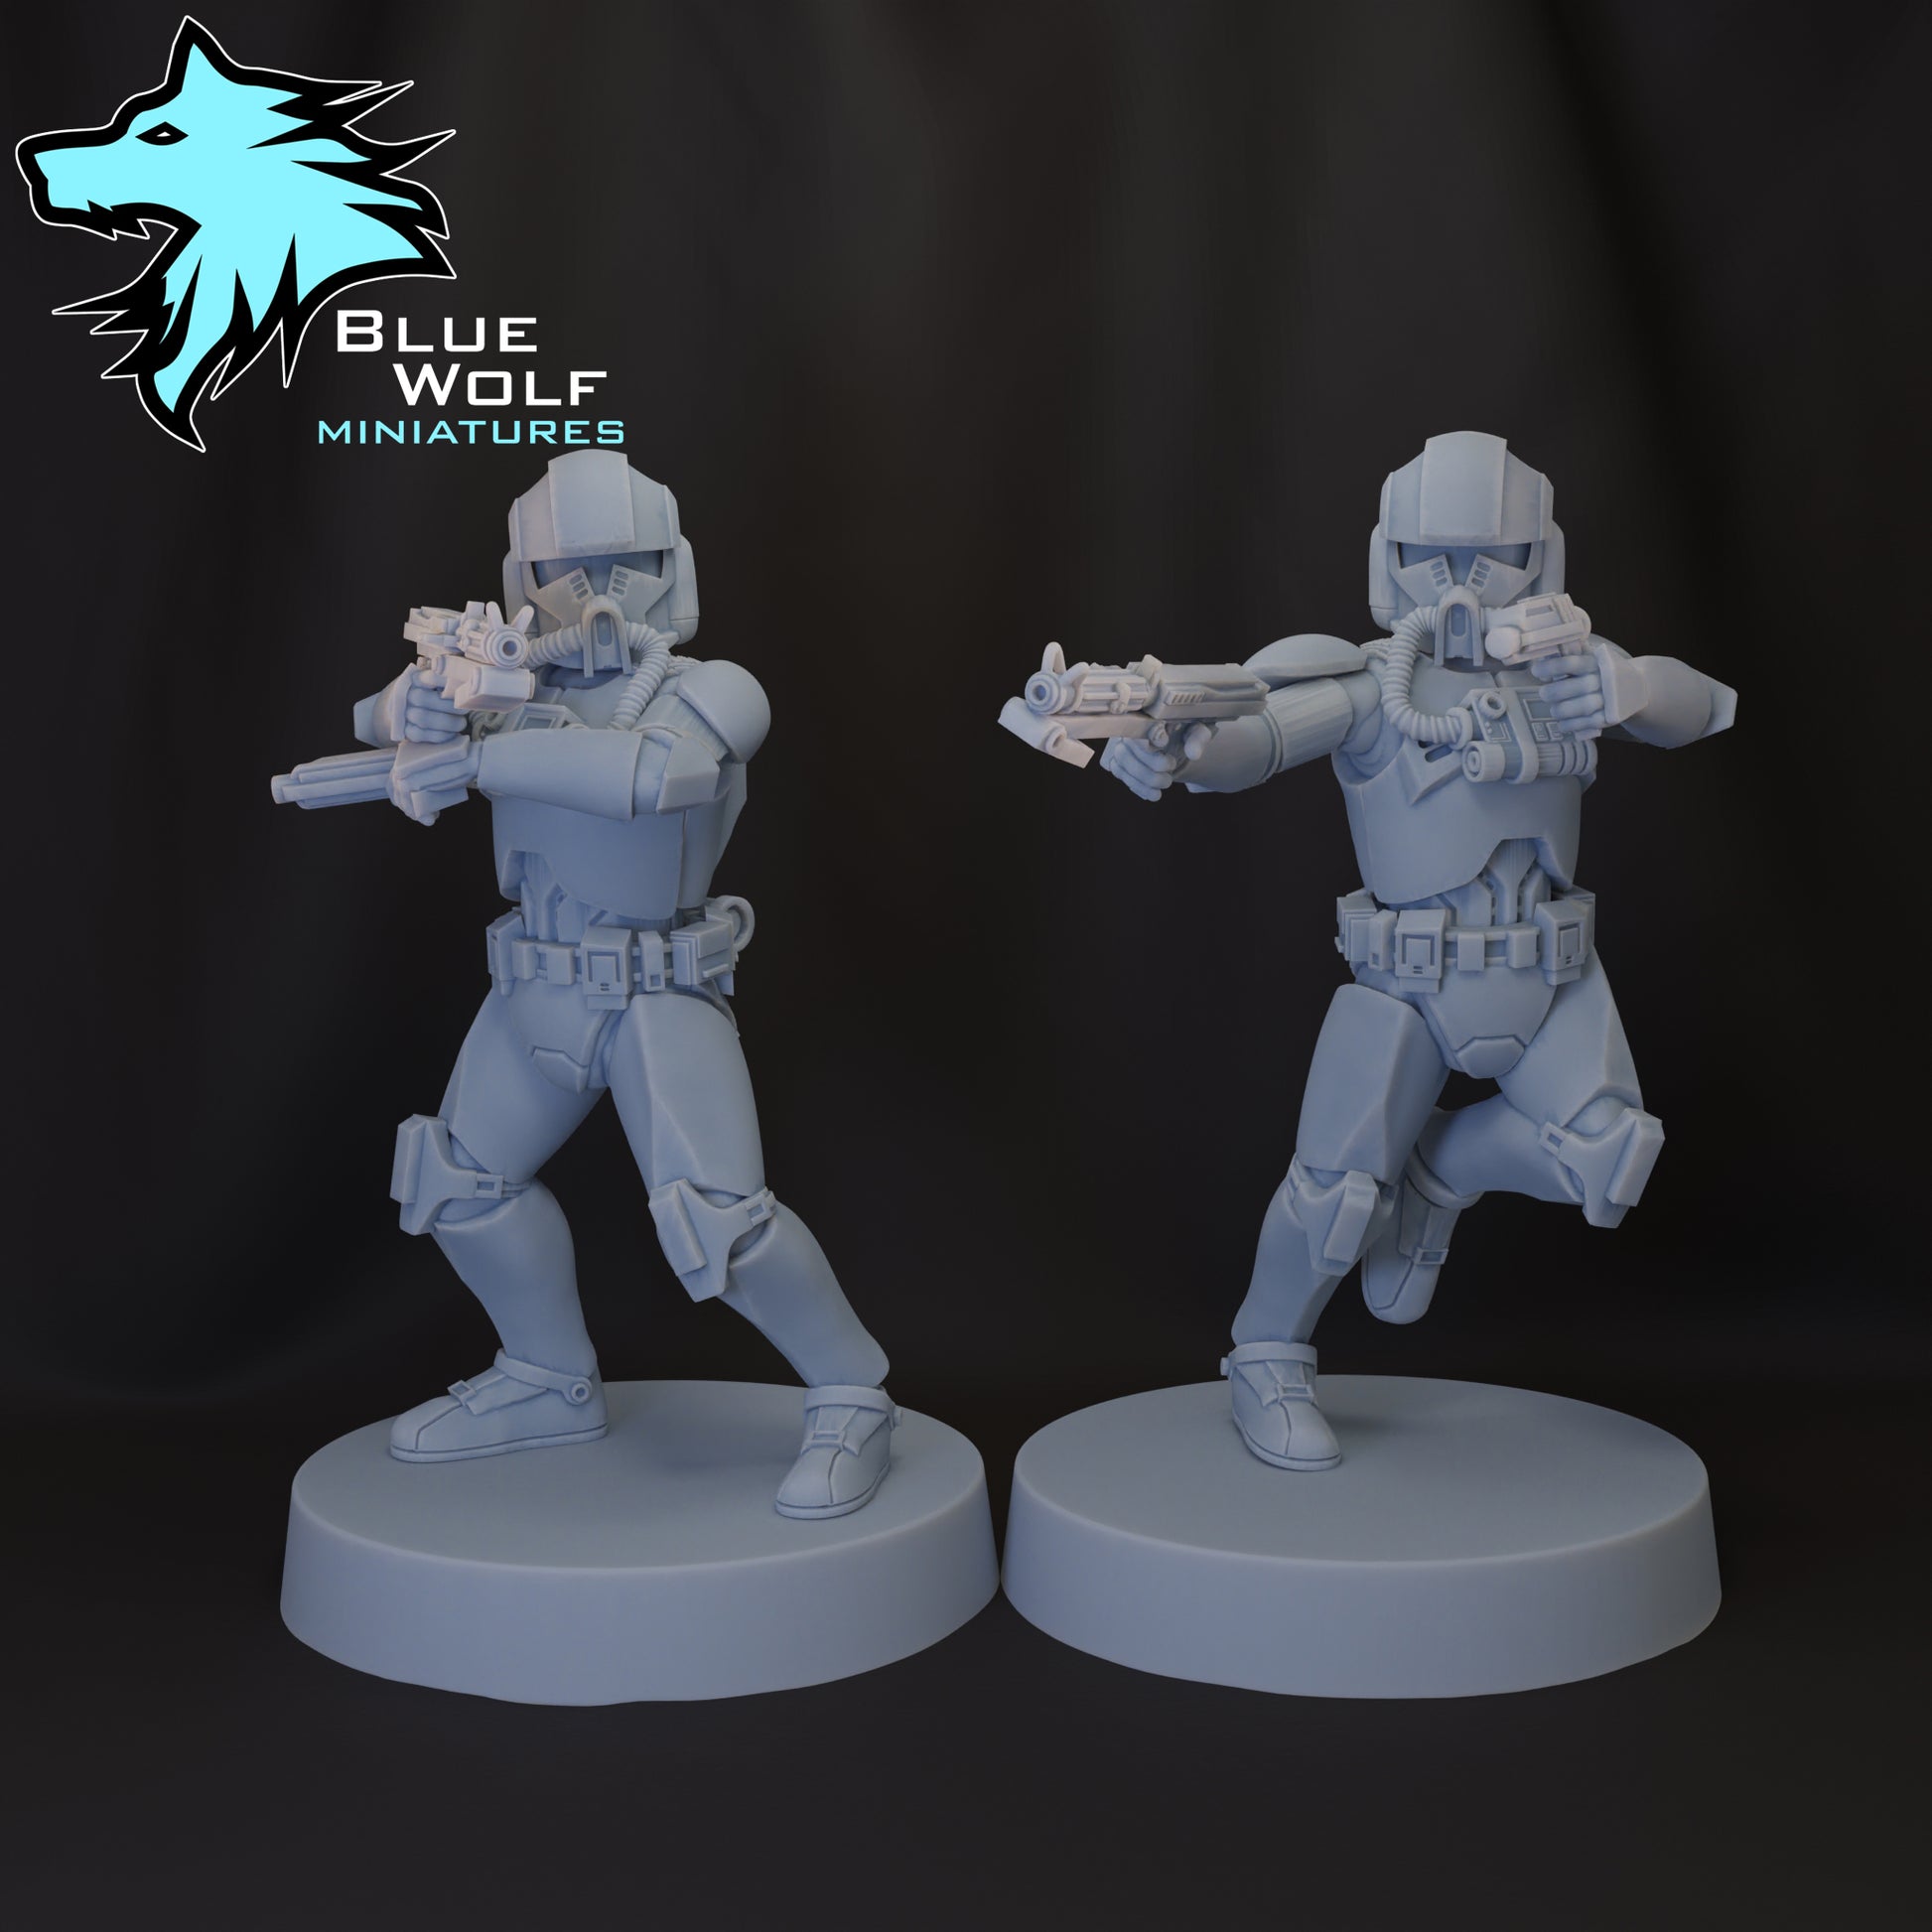 P1 Clone Pilot Commander ‧ 2 Varianten ‧ Blue Wolf Miniatures ‧ 1:48 Scale ‧ 35mm.